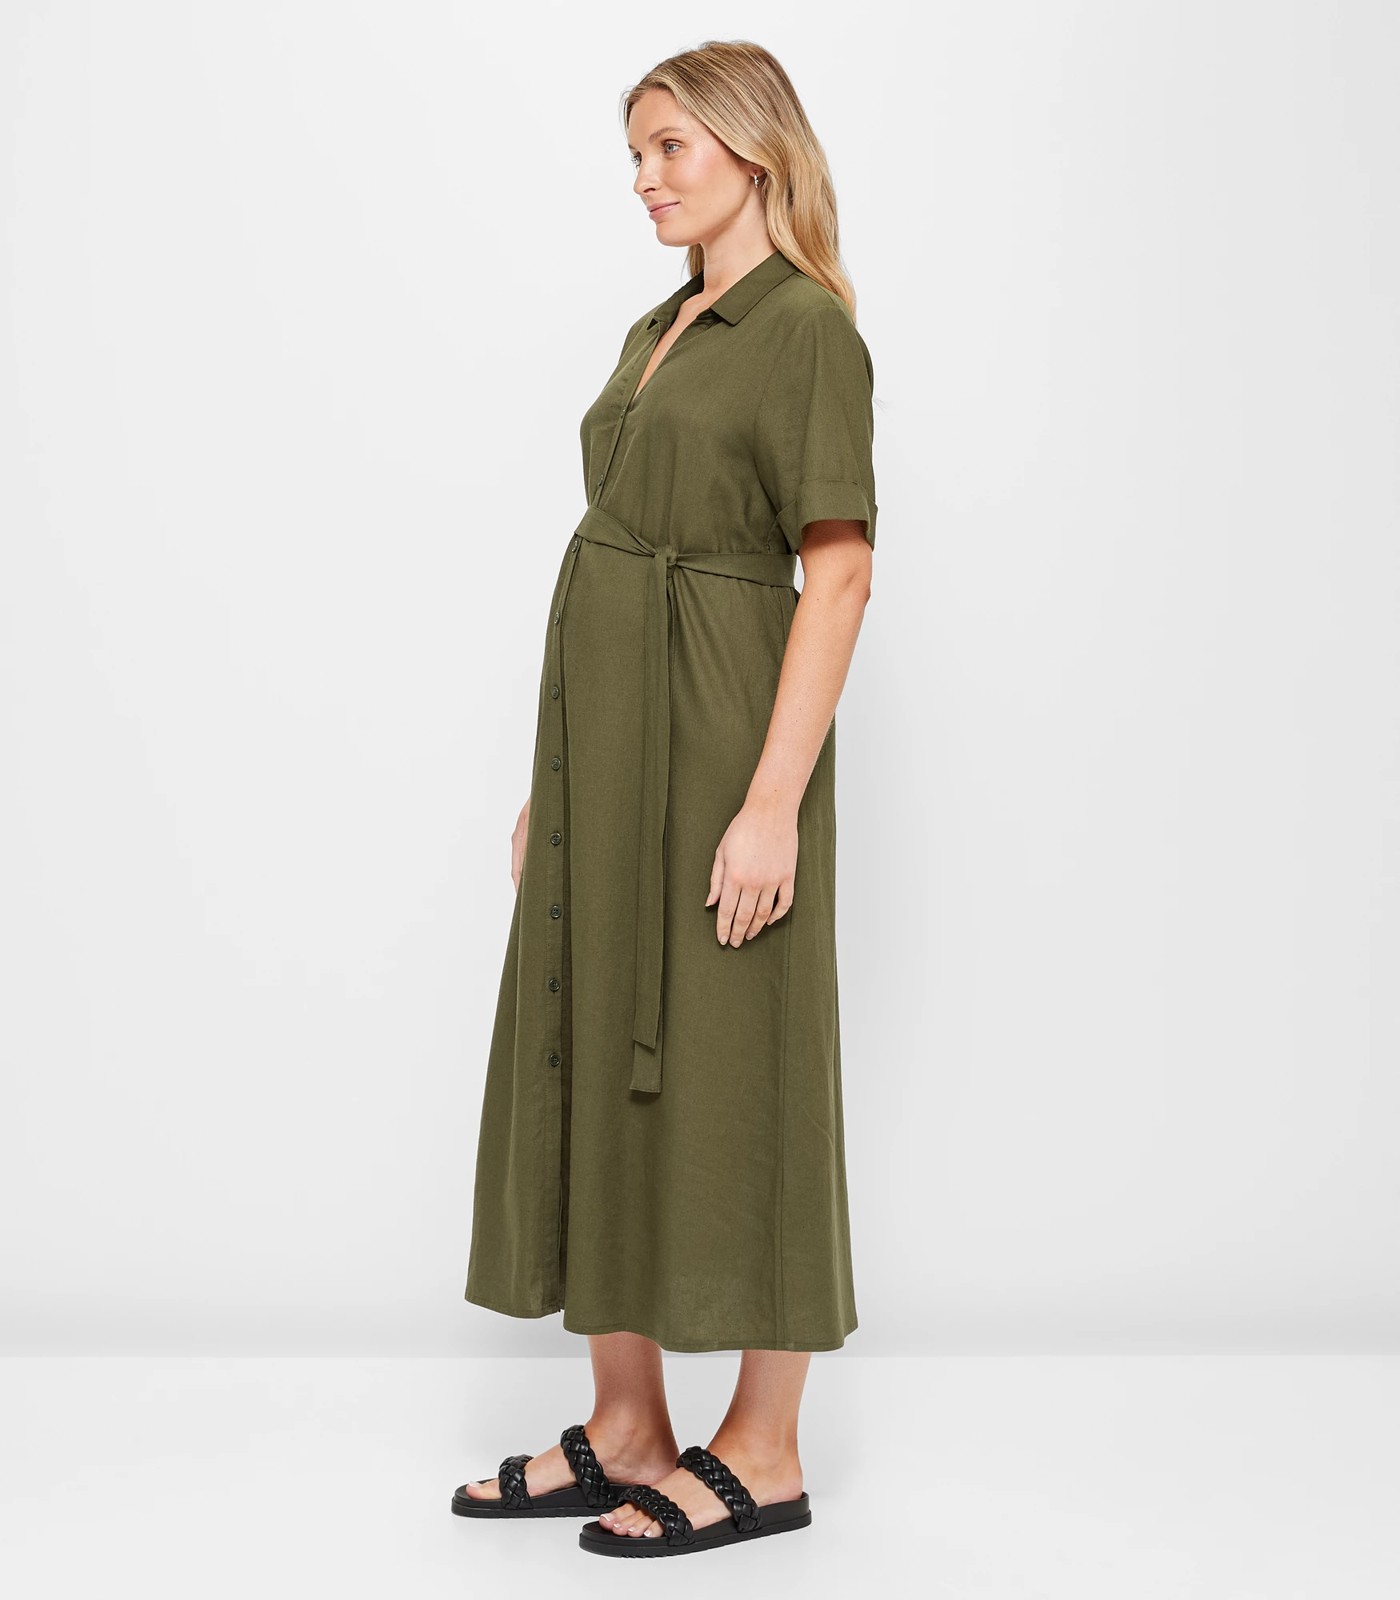 Ripe Maternity Australia Green Print Dress S - Reluv Clothing